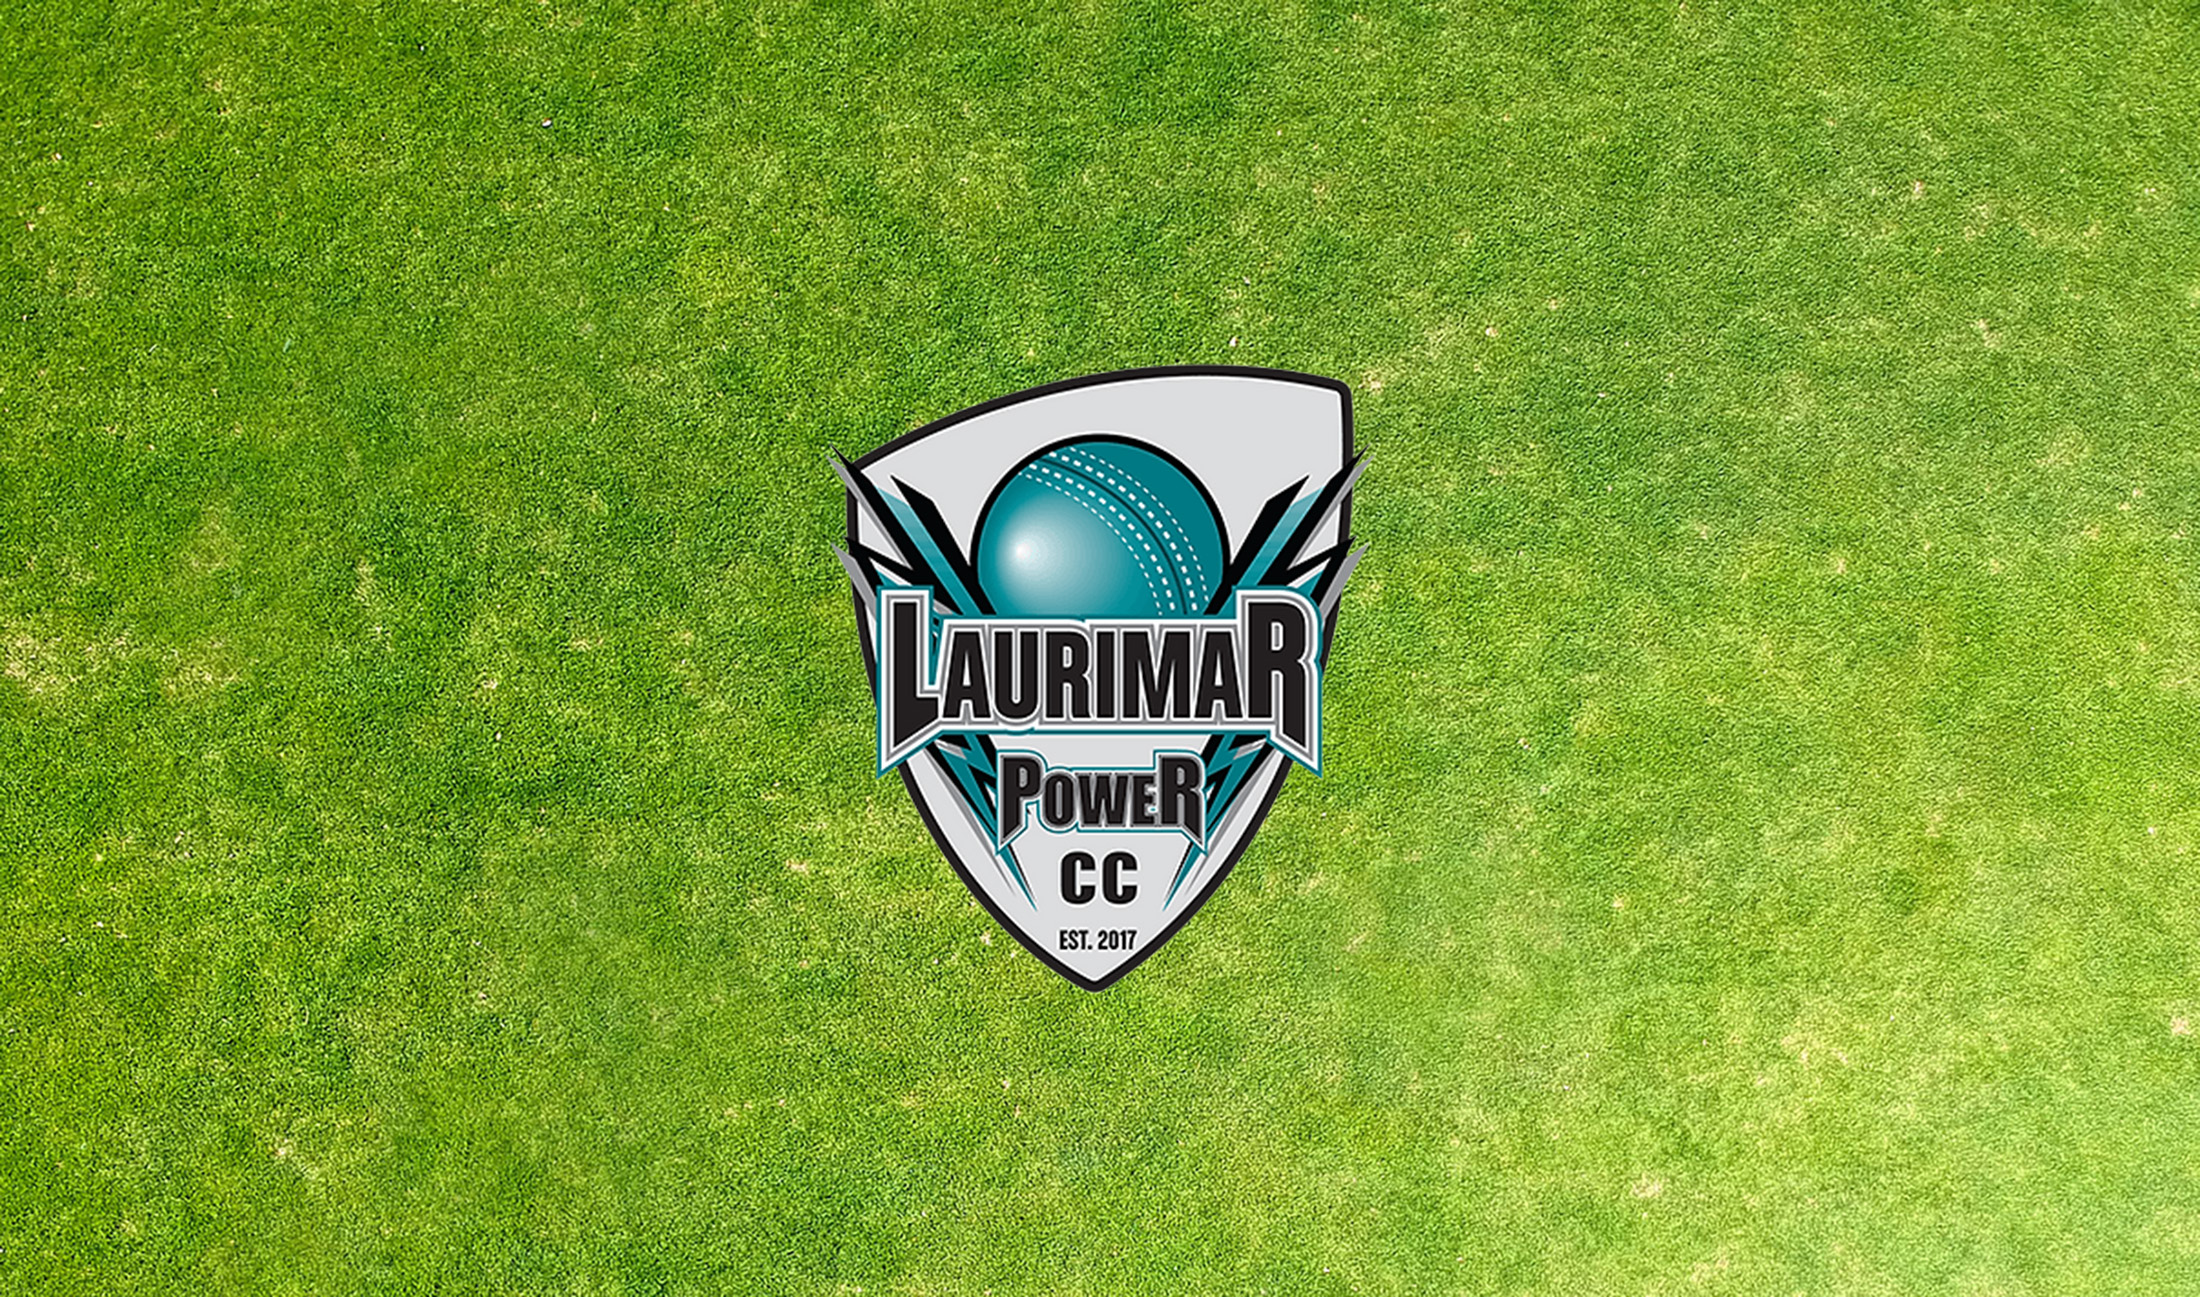 Laurimar Cricket Club seeking Men’s Senior Assistant Coach for season 2022/23